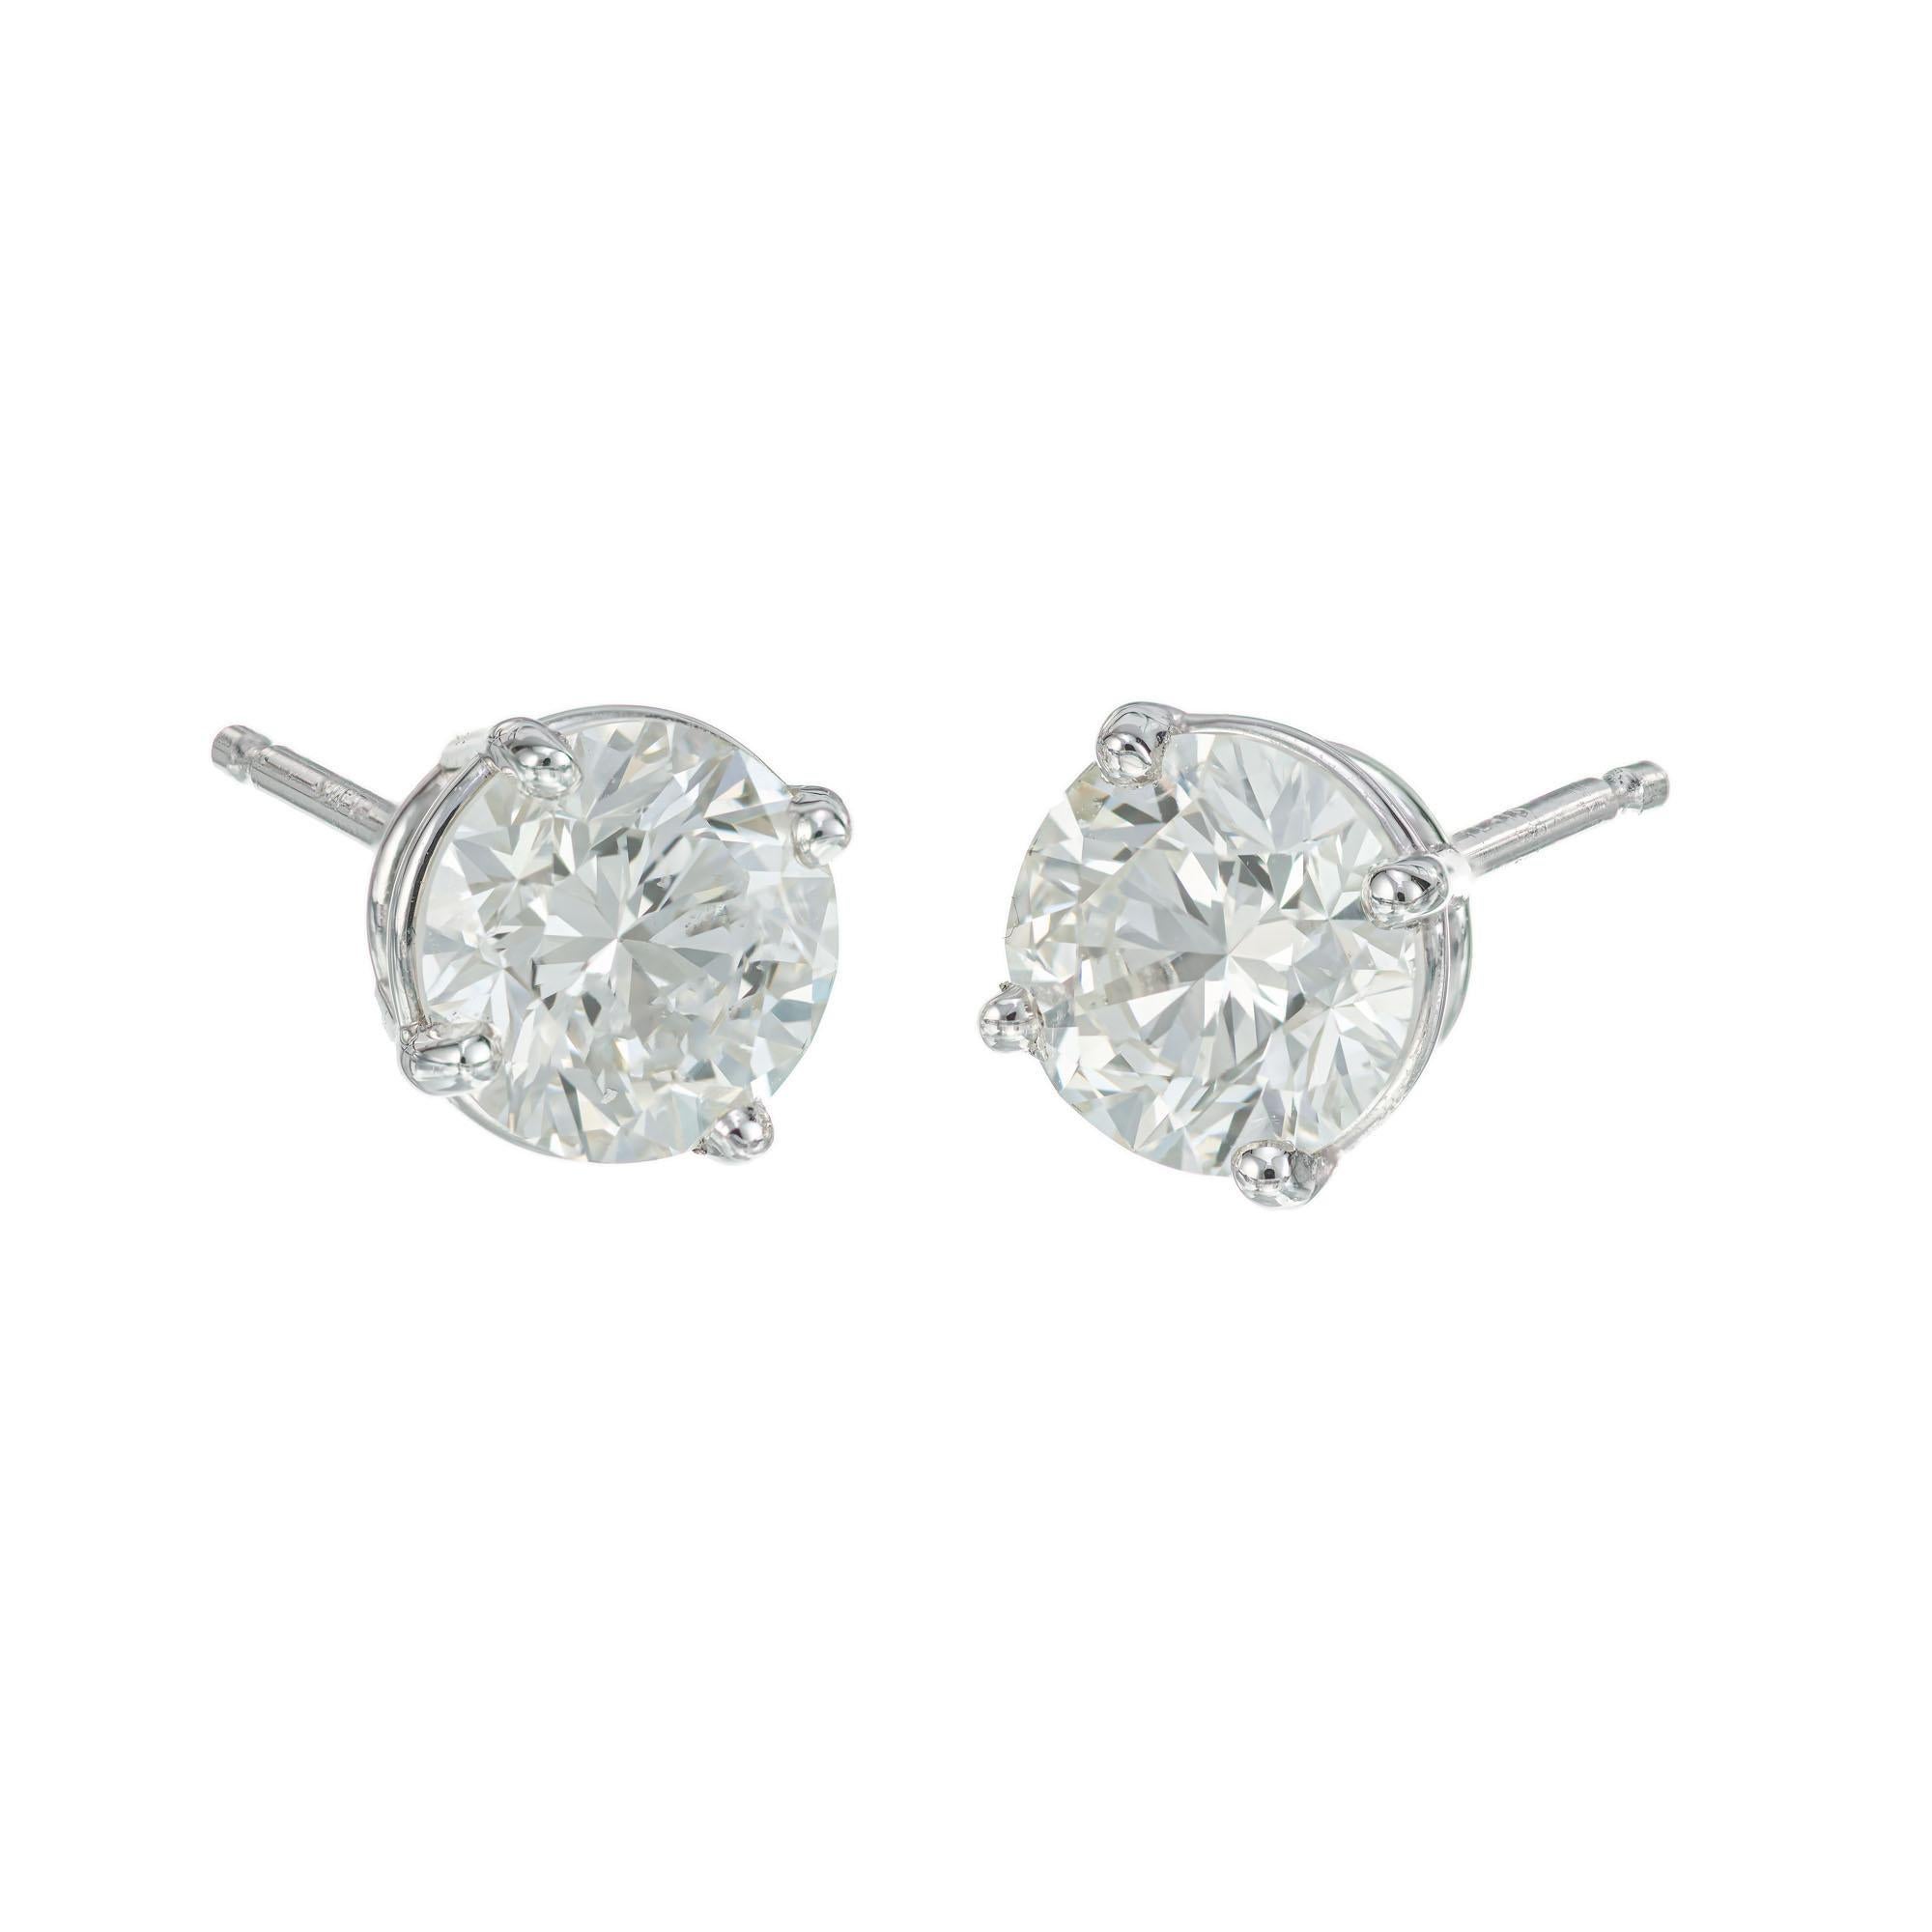 Diamond stud earrings. 2 round brilliant cut diamonds totalling 2.02cts, set in 4 prong platinum basket settings. 

1 round brilliant cut diamond, I-J VS approx. 1.08ct EGL Certificate # 400148925D
1 round brilliant cut diamond, I-J VS approx.